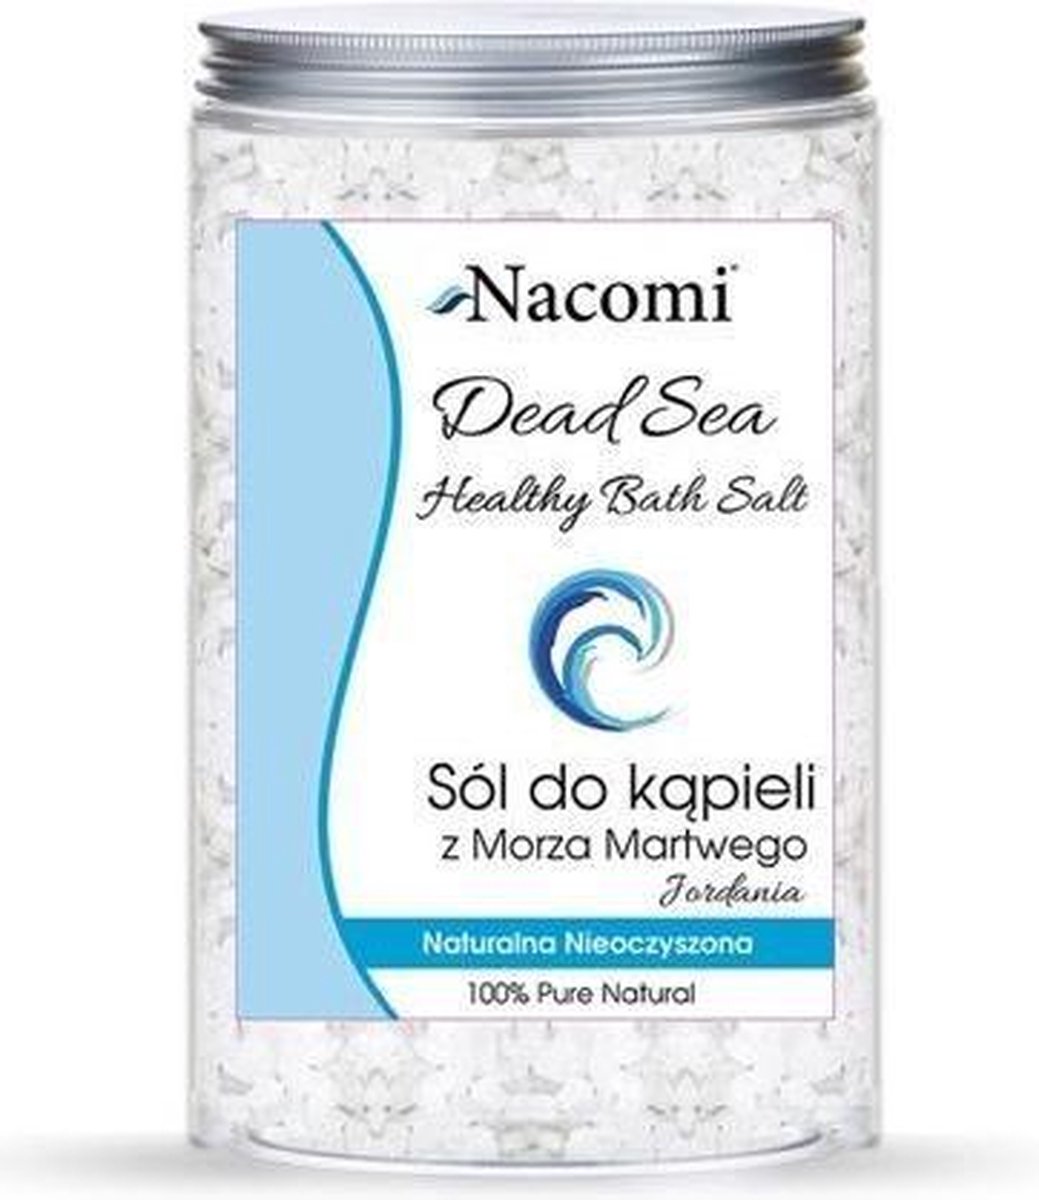 Nacomi Dead Sea Healthy Bath Salt 1400g.